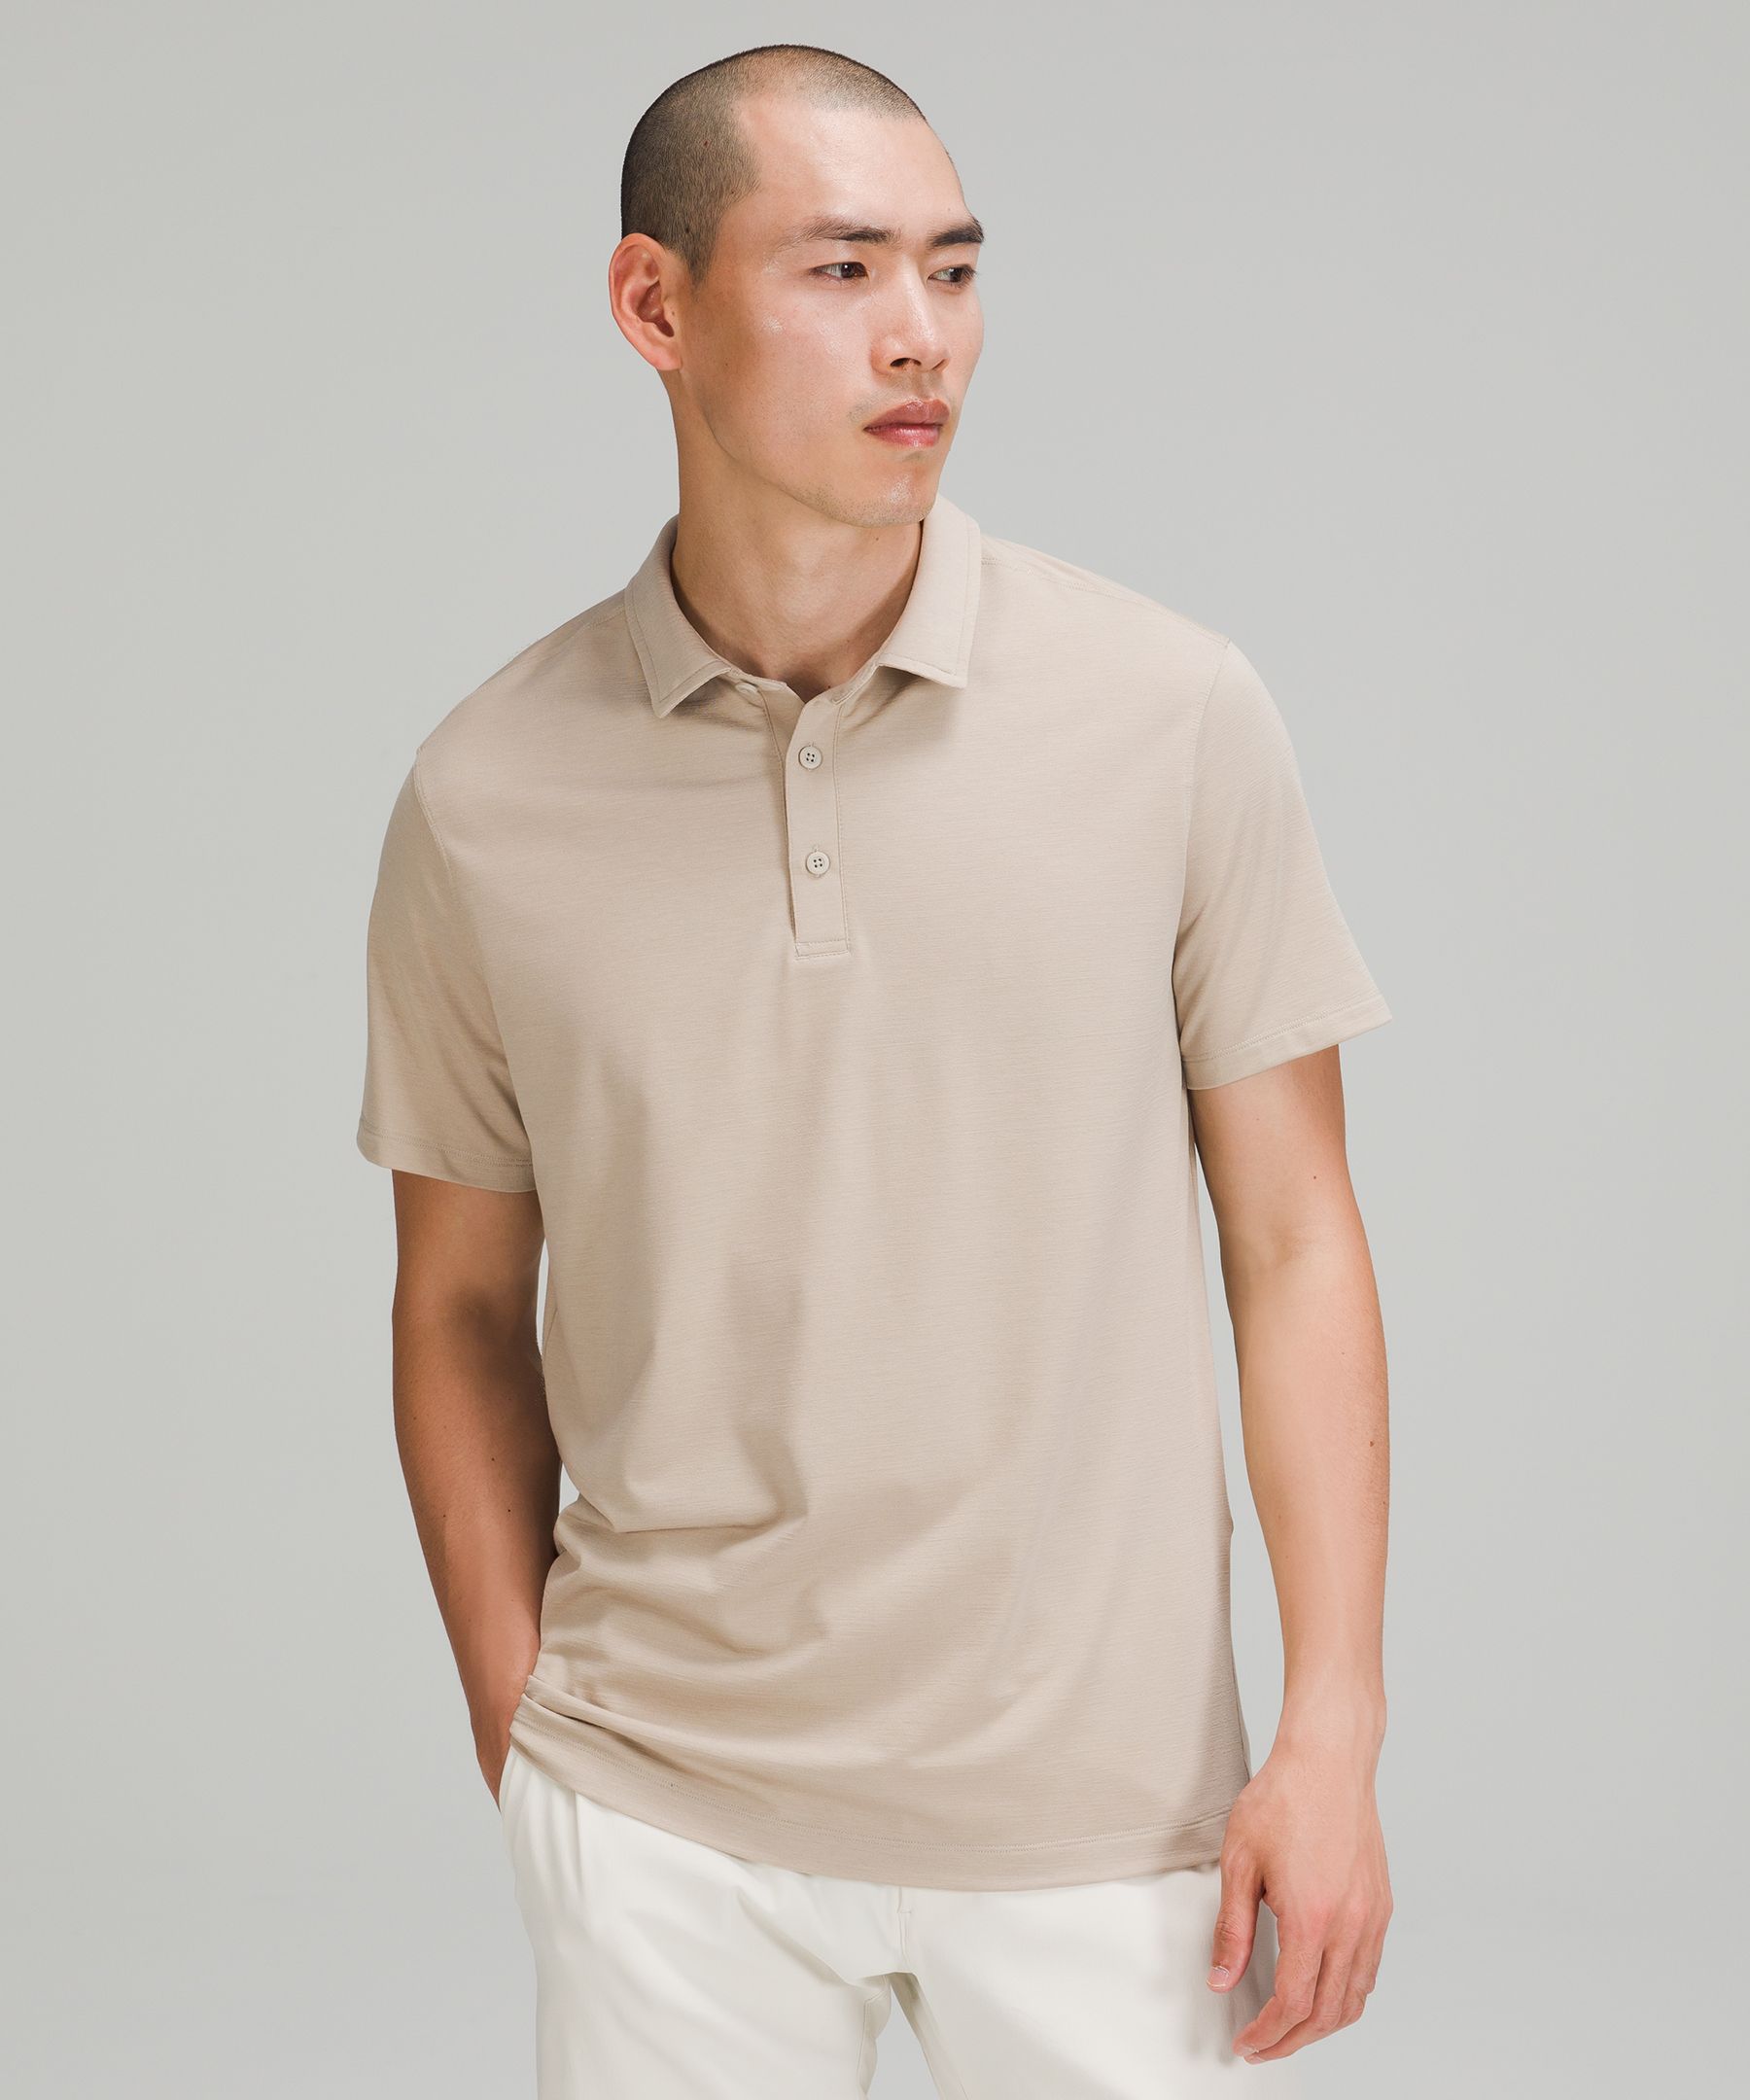 Lululemon Evolution Short Sleeve Polo Shirt Pique Fabric In Raw Linen